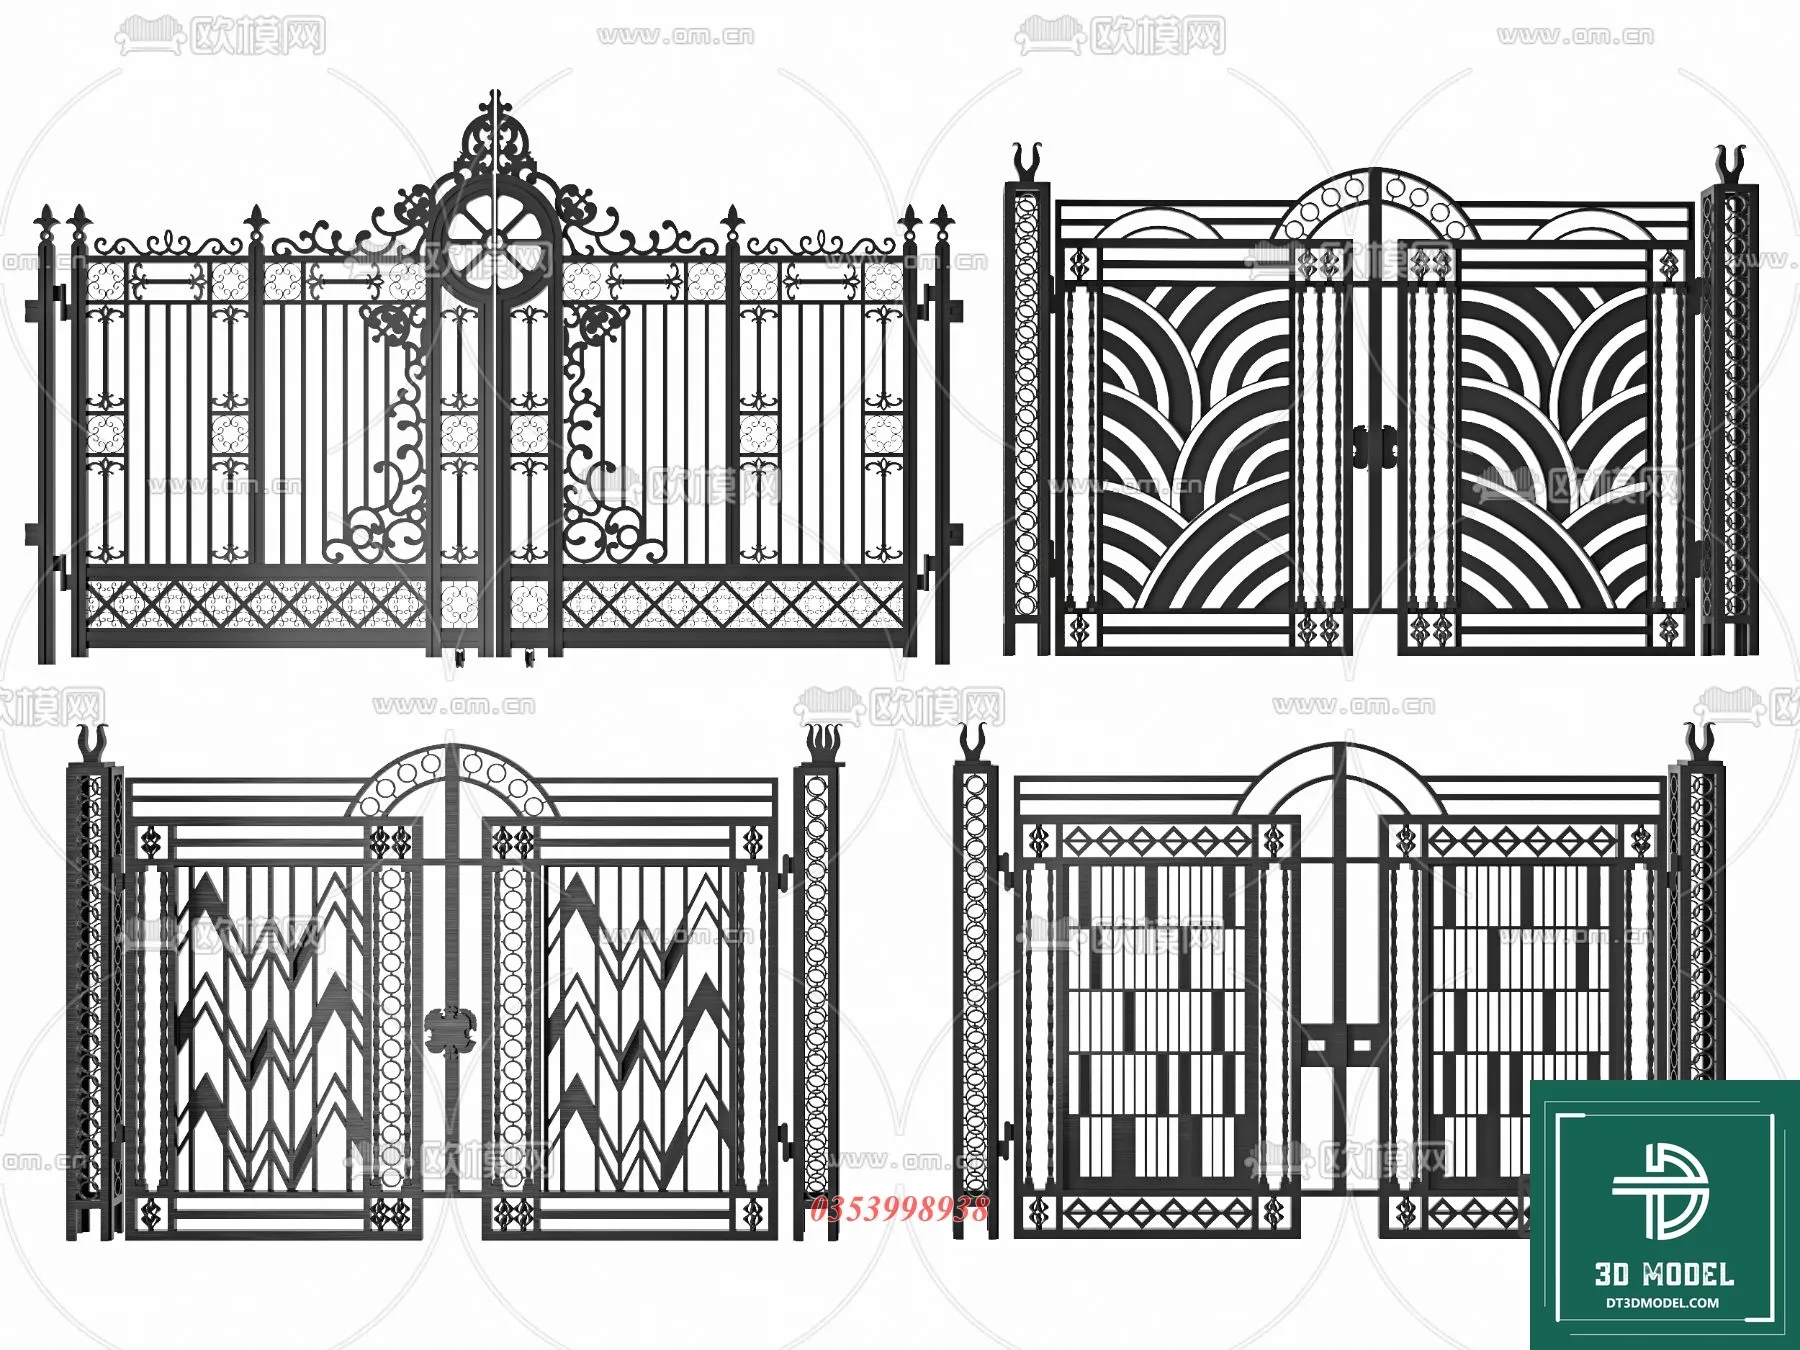 CLASSIC GATE – 3D MODELS – 080